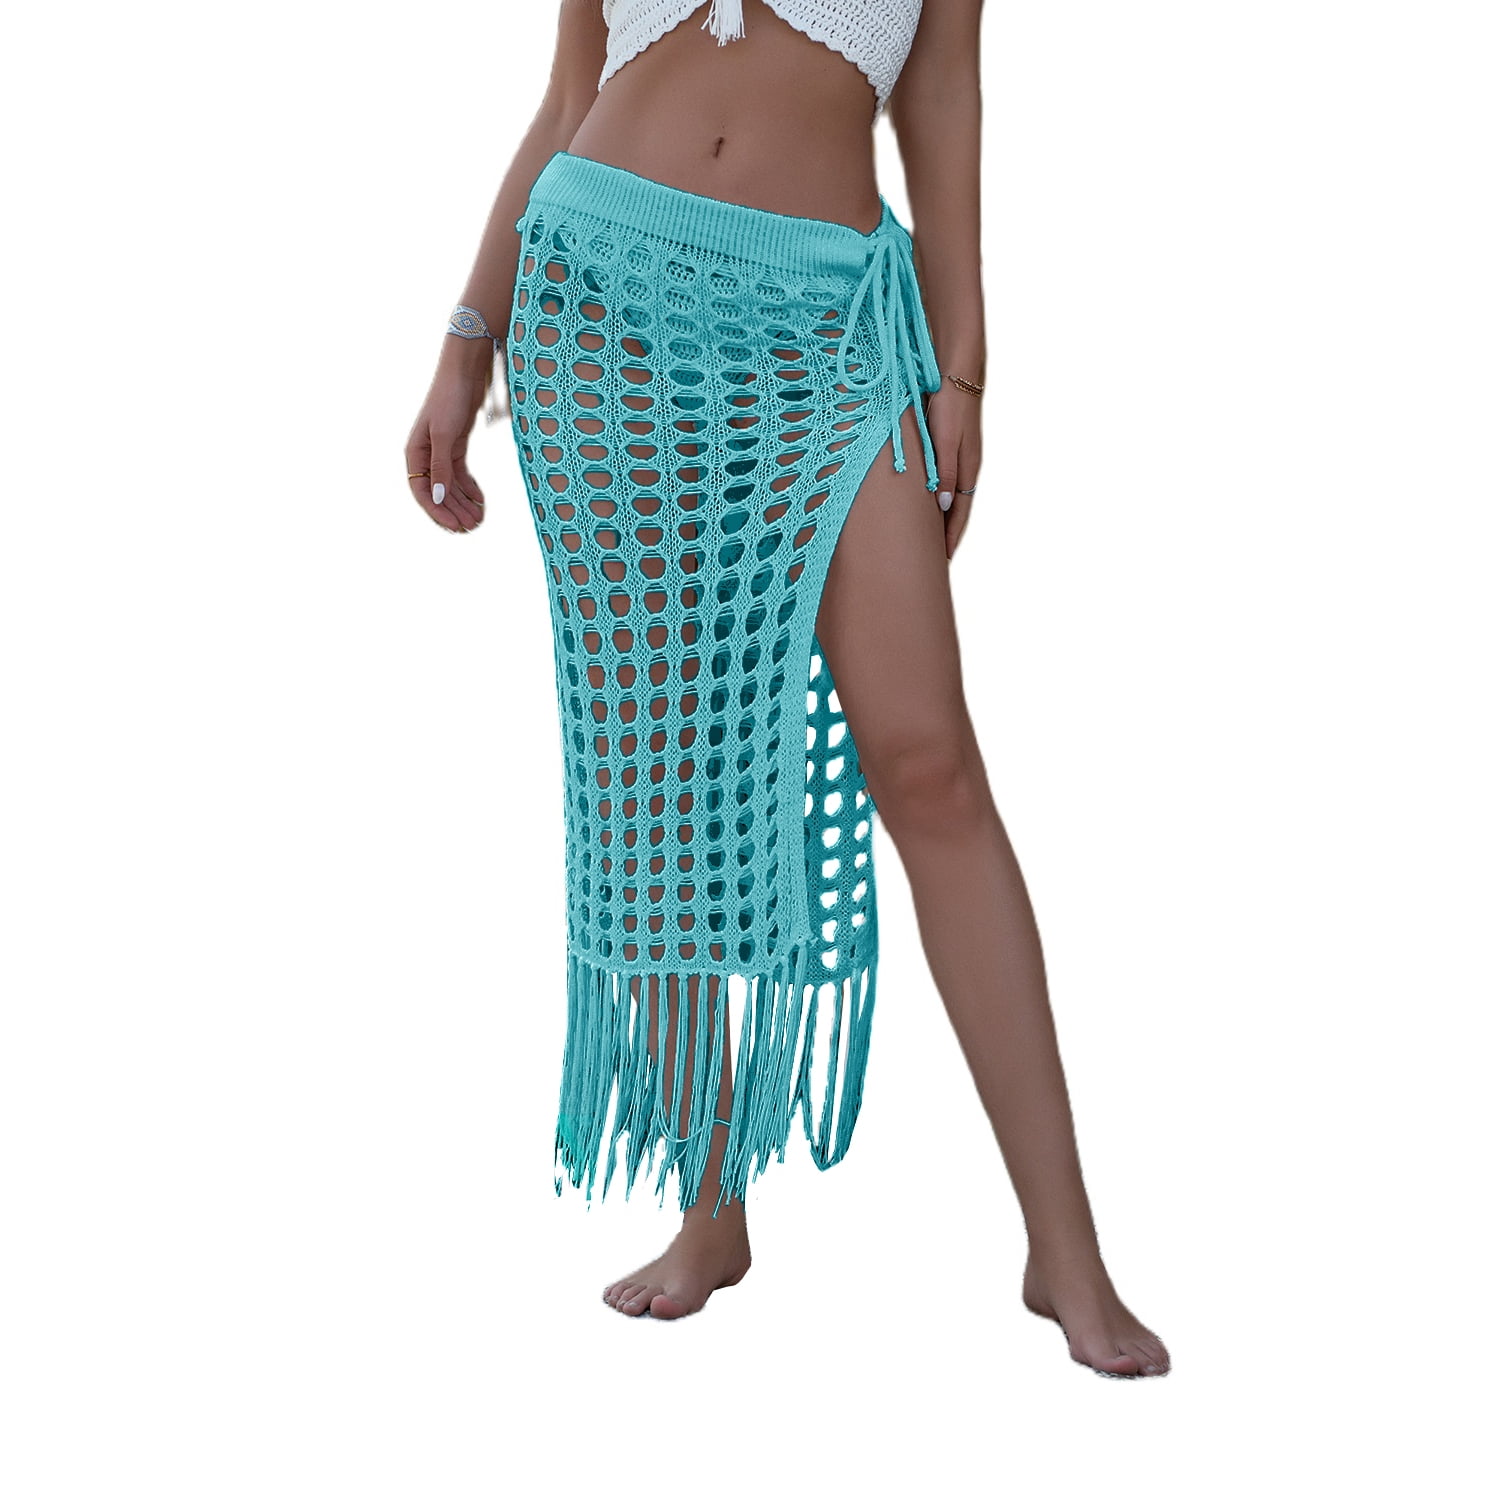 JBEELATE Women Sexy Hollow Out Mesh Tassle Skirts Beach Cover Up Summer  Fish Net Swimsuit Wrap Sheer Maxi Sarong Swimwear